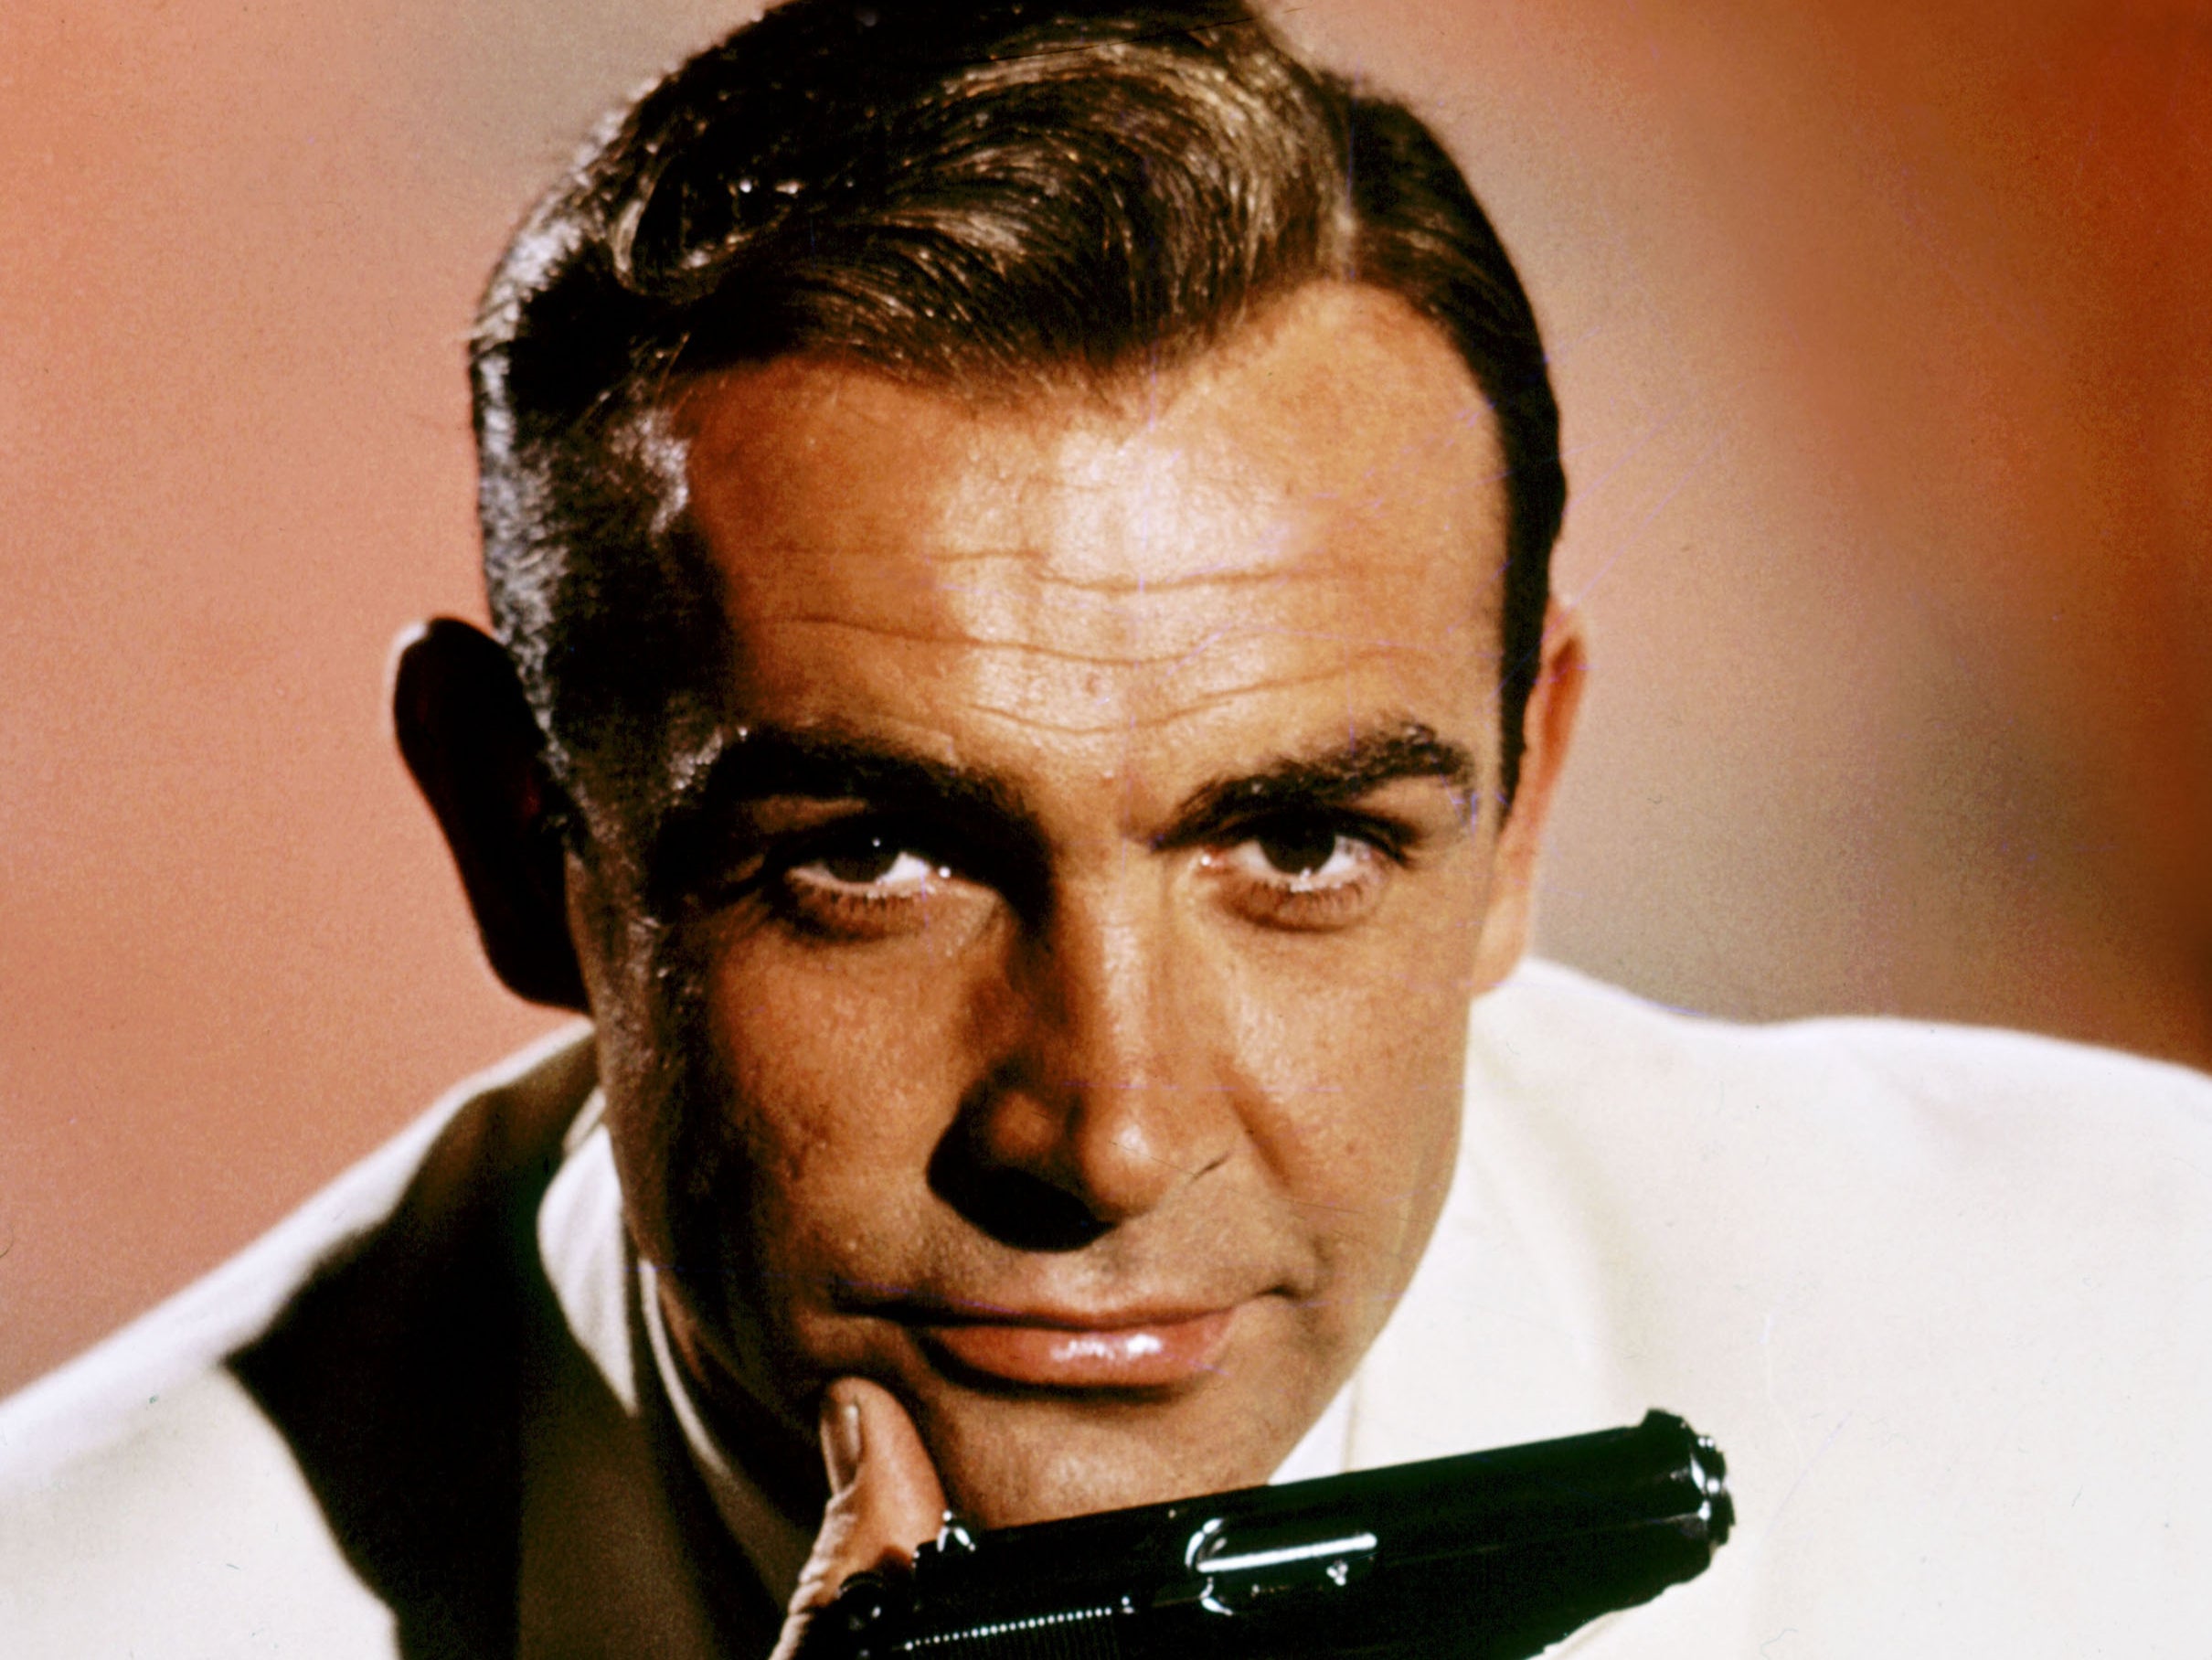 Sean Connery as James Bond in ‘Dr No’ (1962)